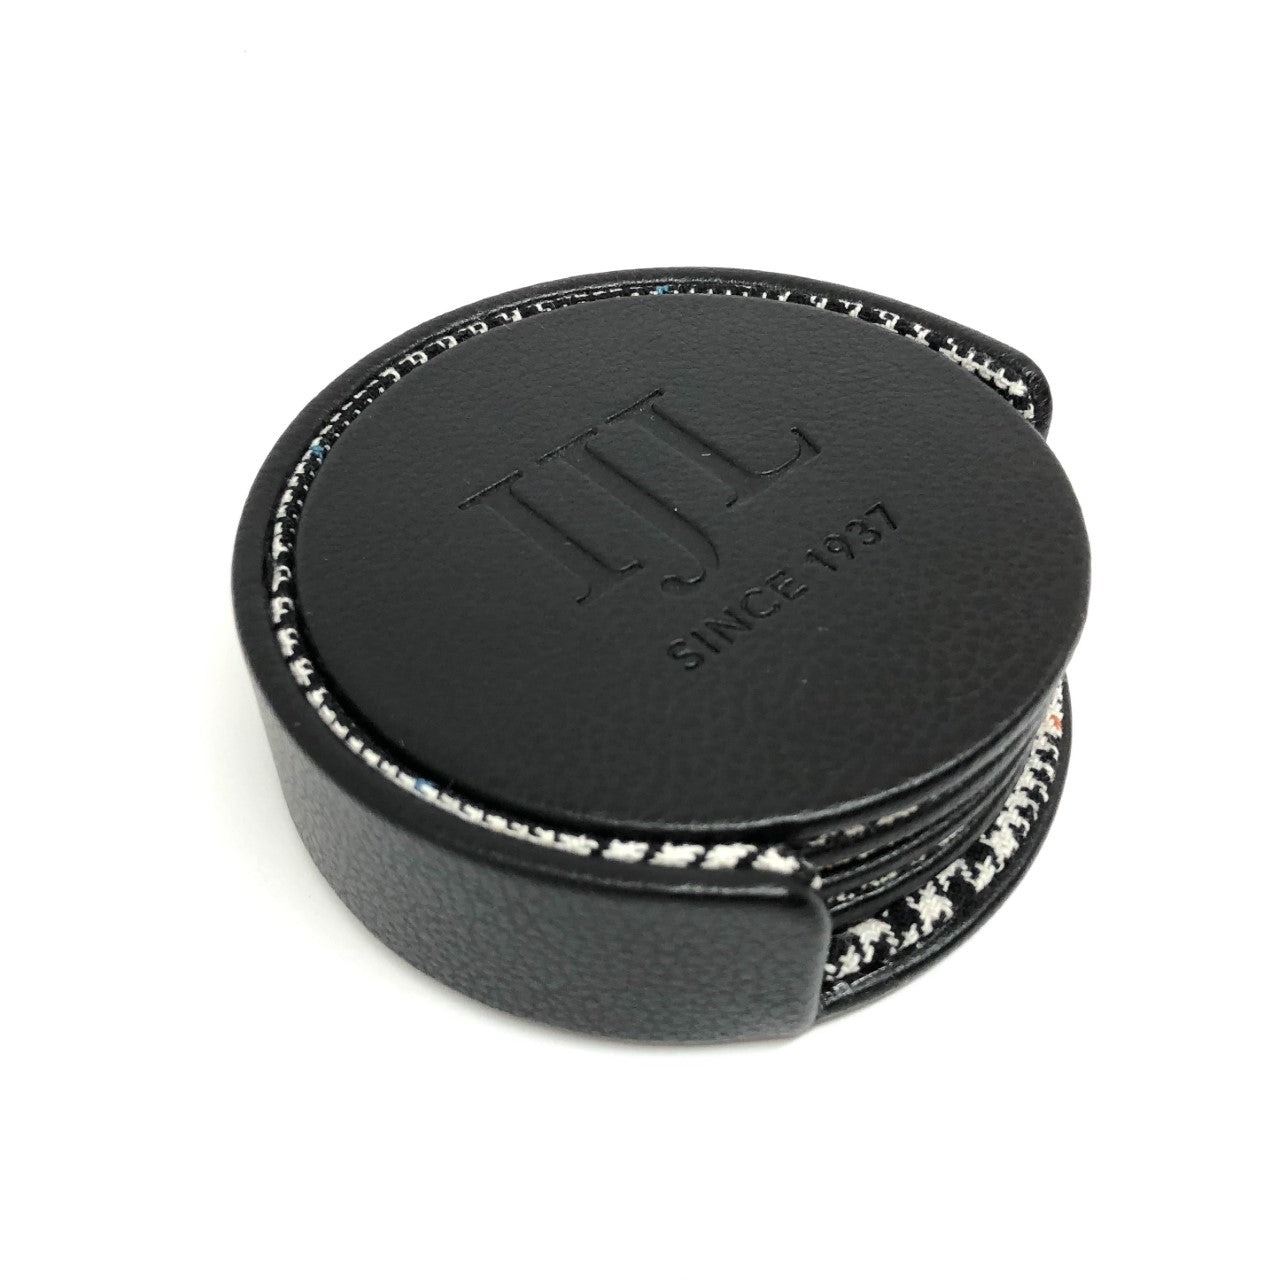 WOLF & IJL Black Leather and Plaid Fabric Coaster Set